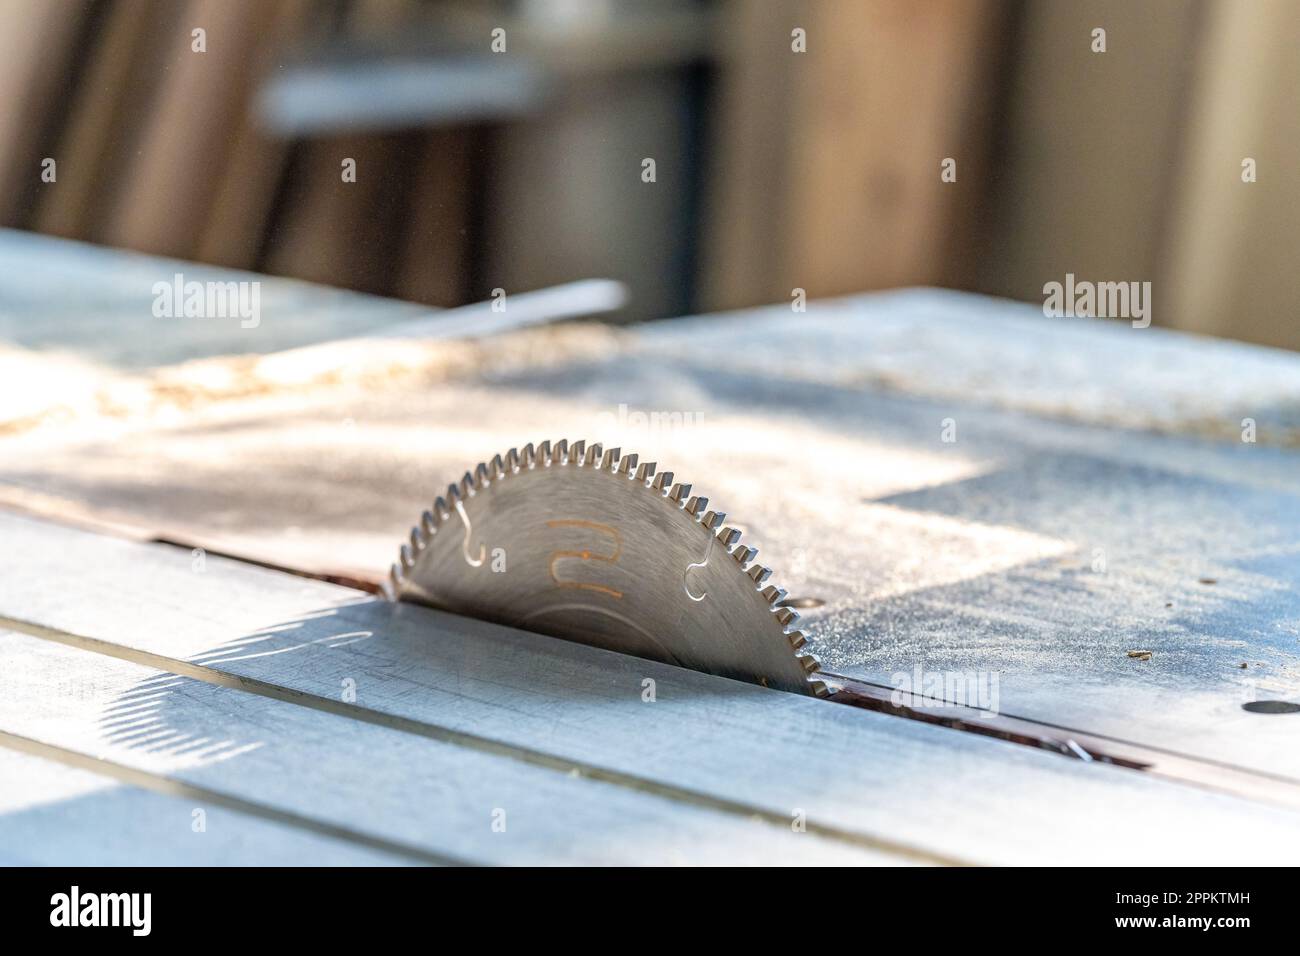 circular saw blade in carpentry Stock Photo